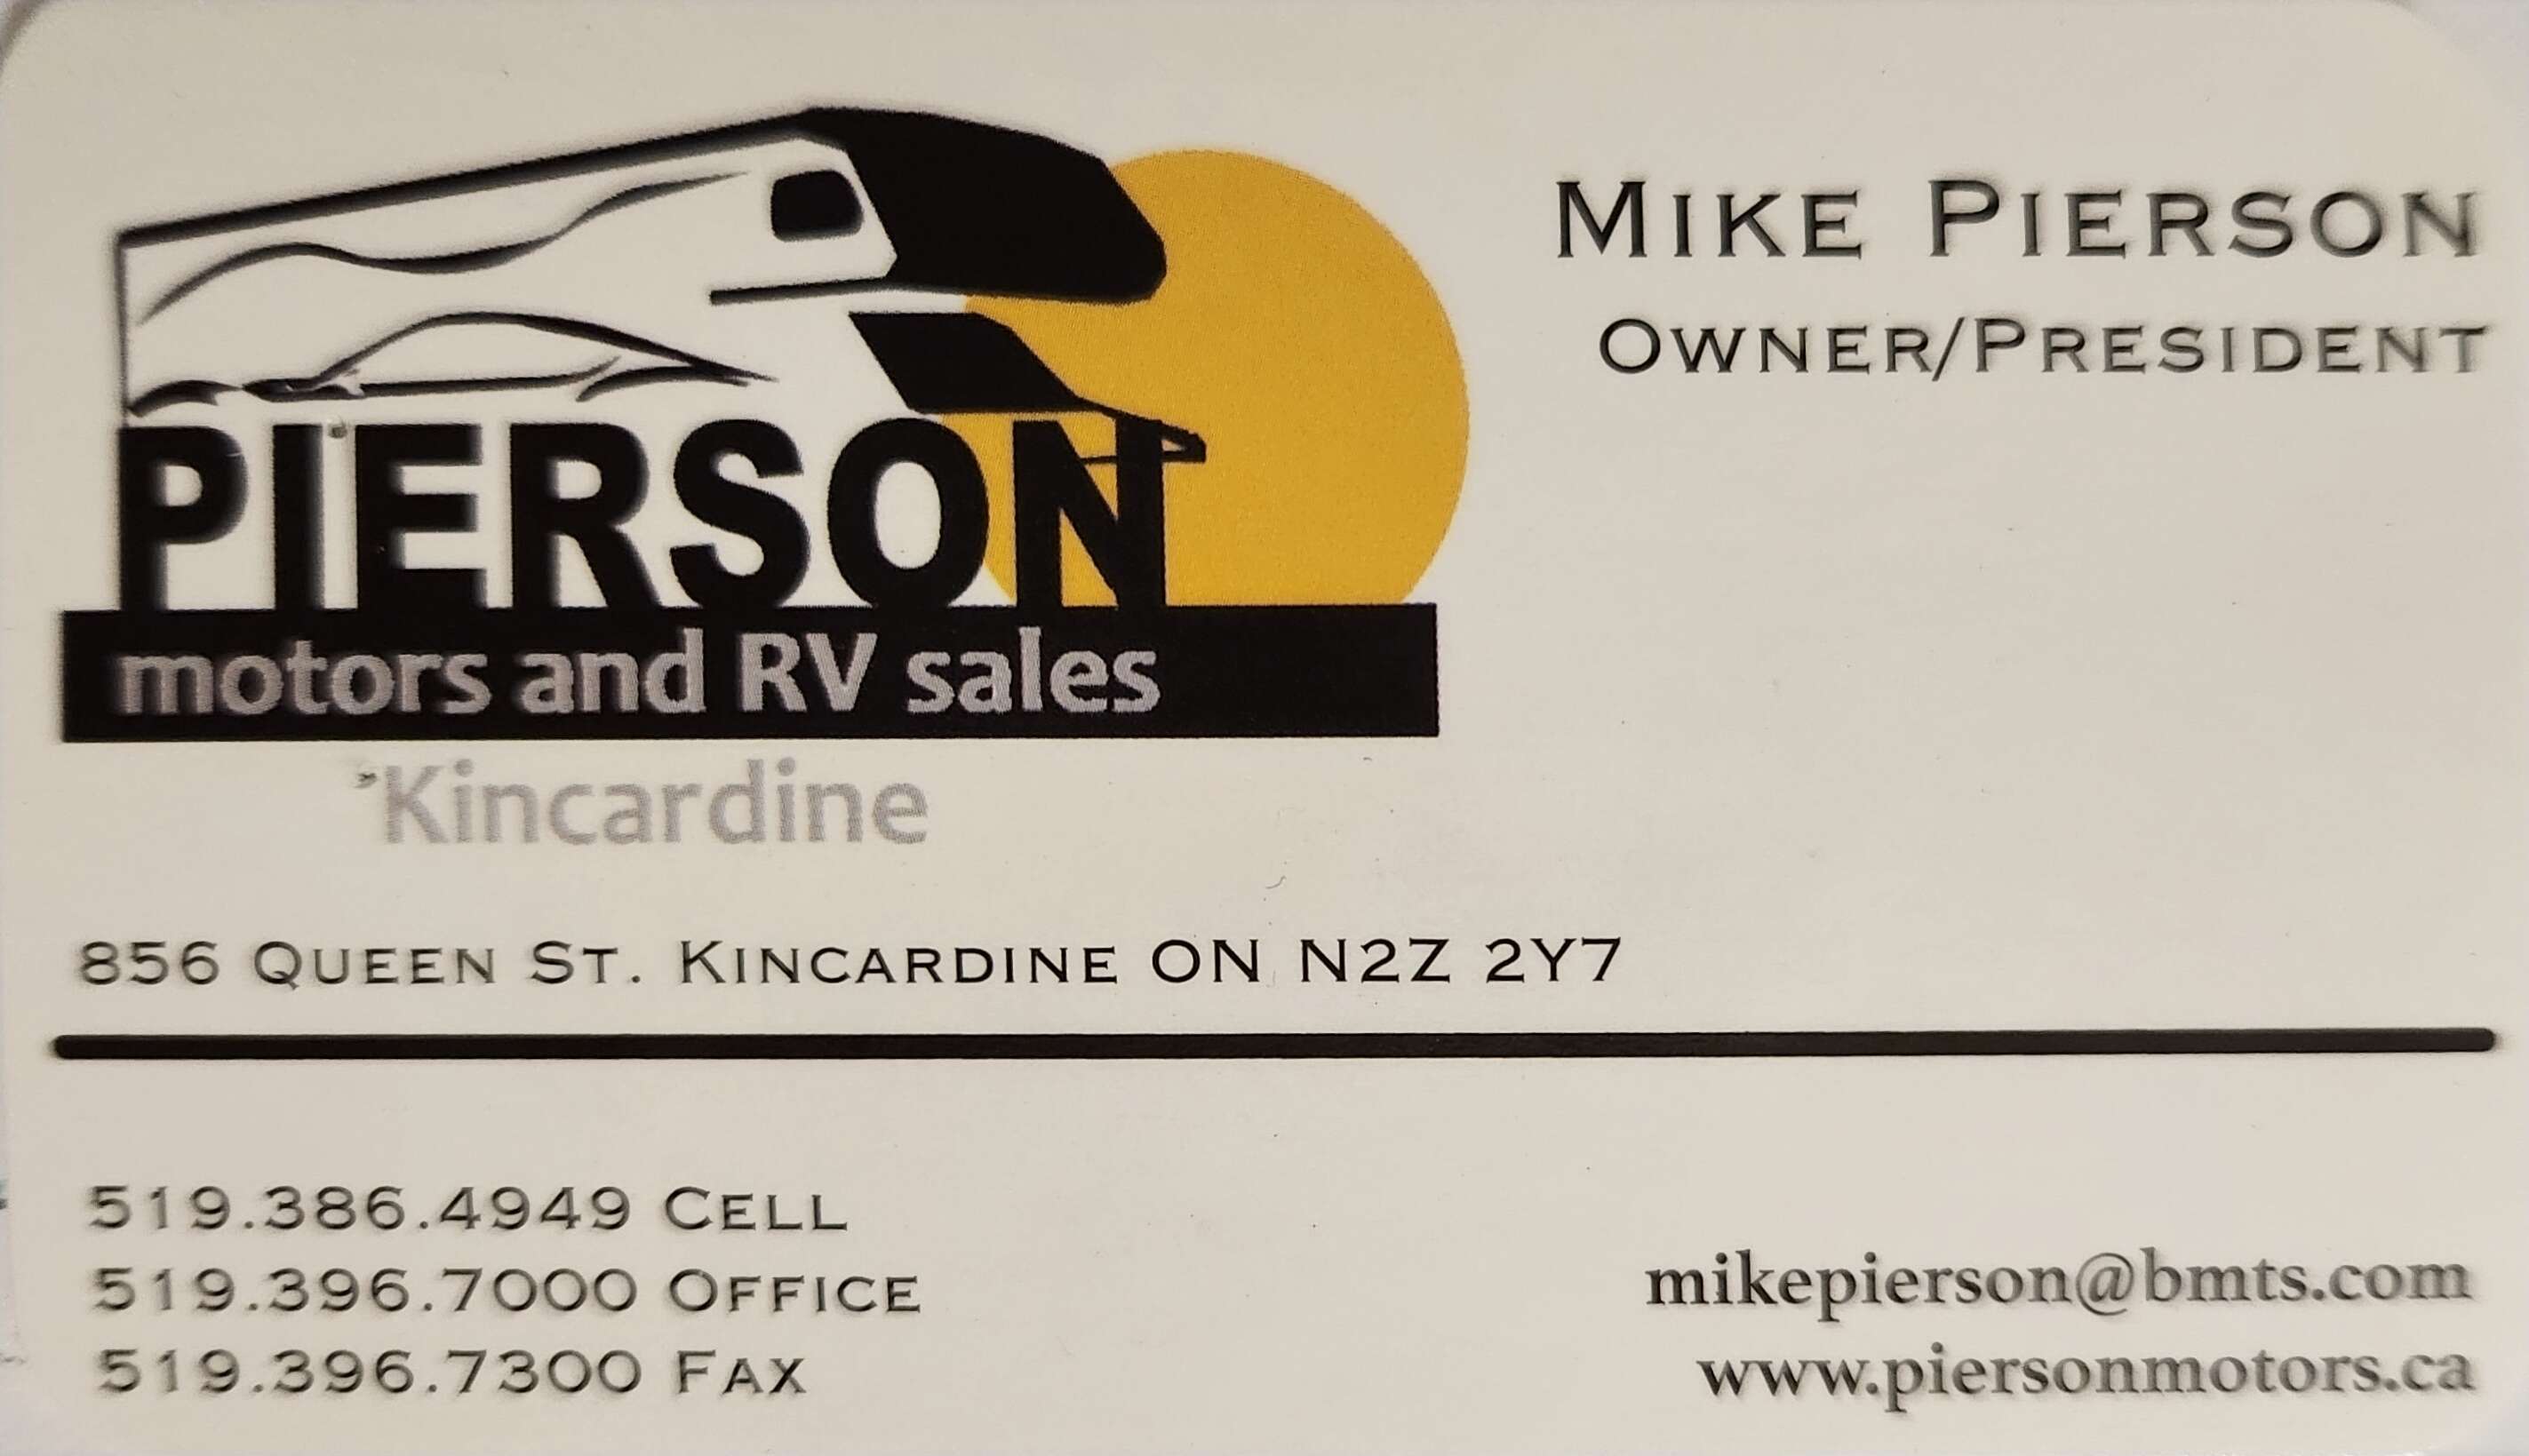 Pierson Motors and RV Sales